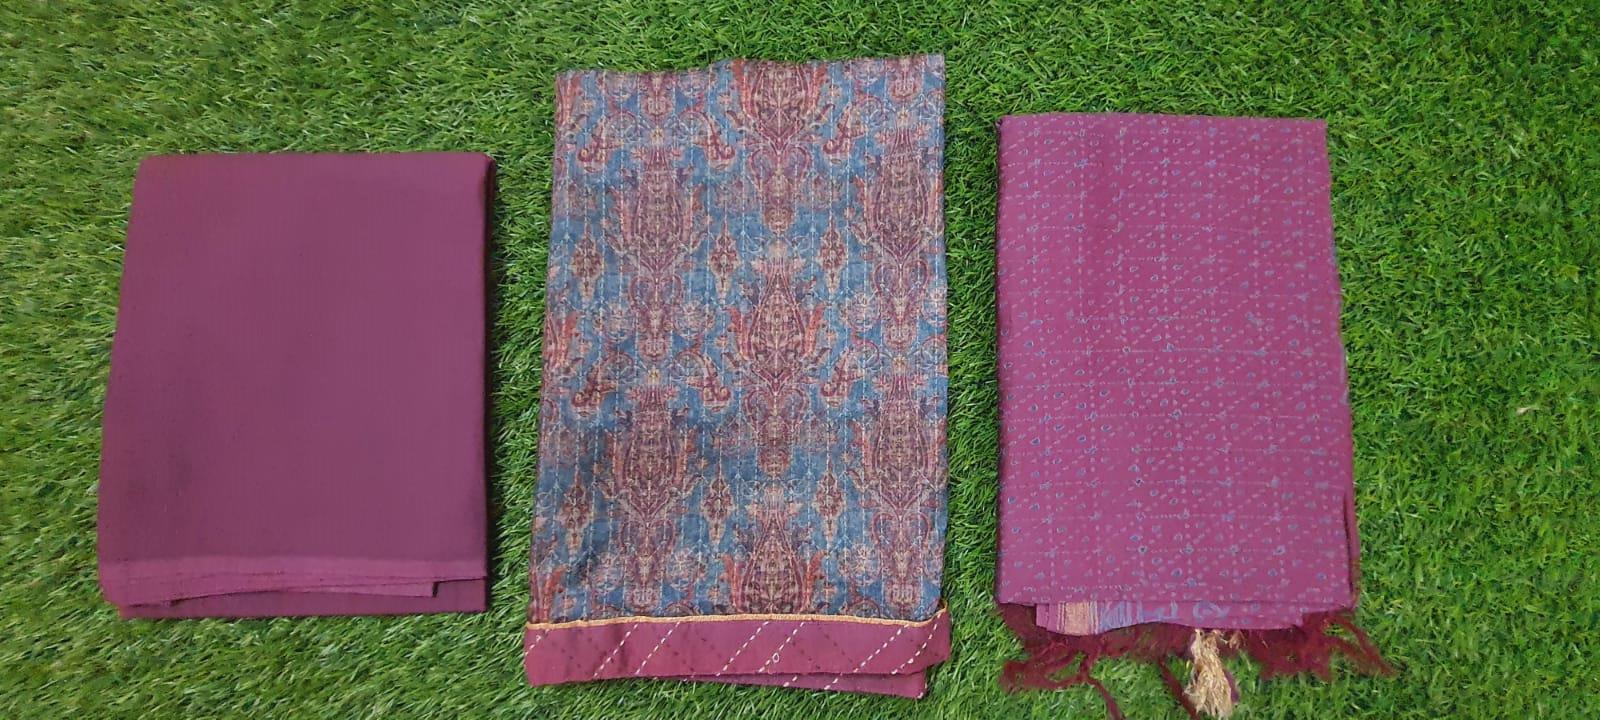 Purple Maheshwari Cotton Silk Dress Material - Ethnic's By Anvi Creations